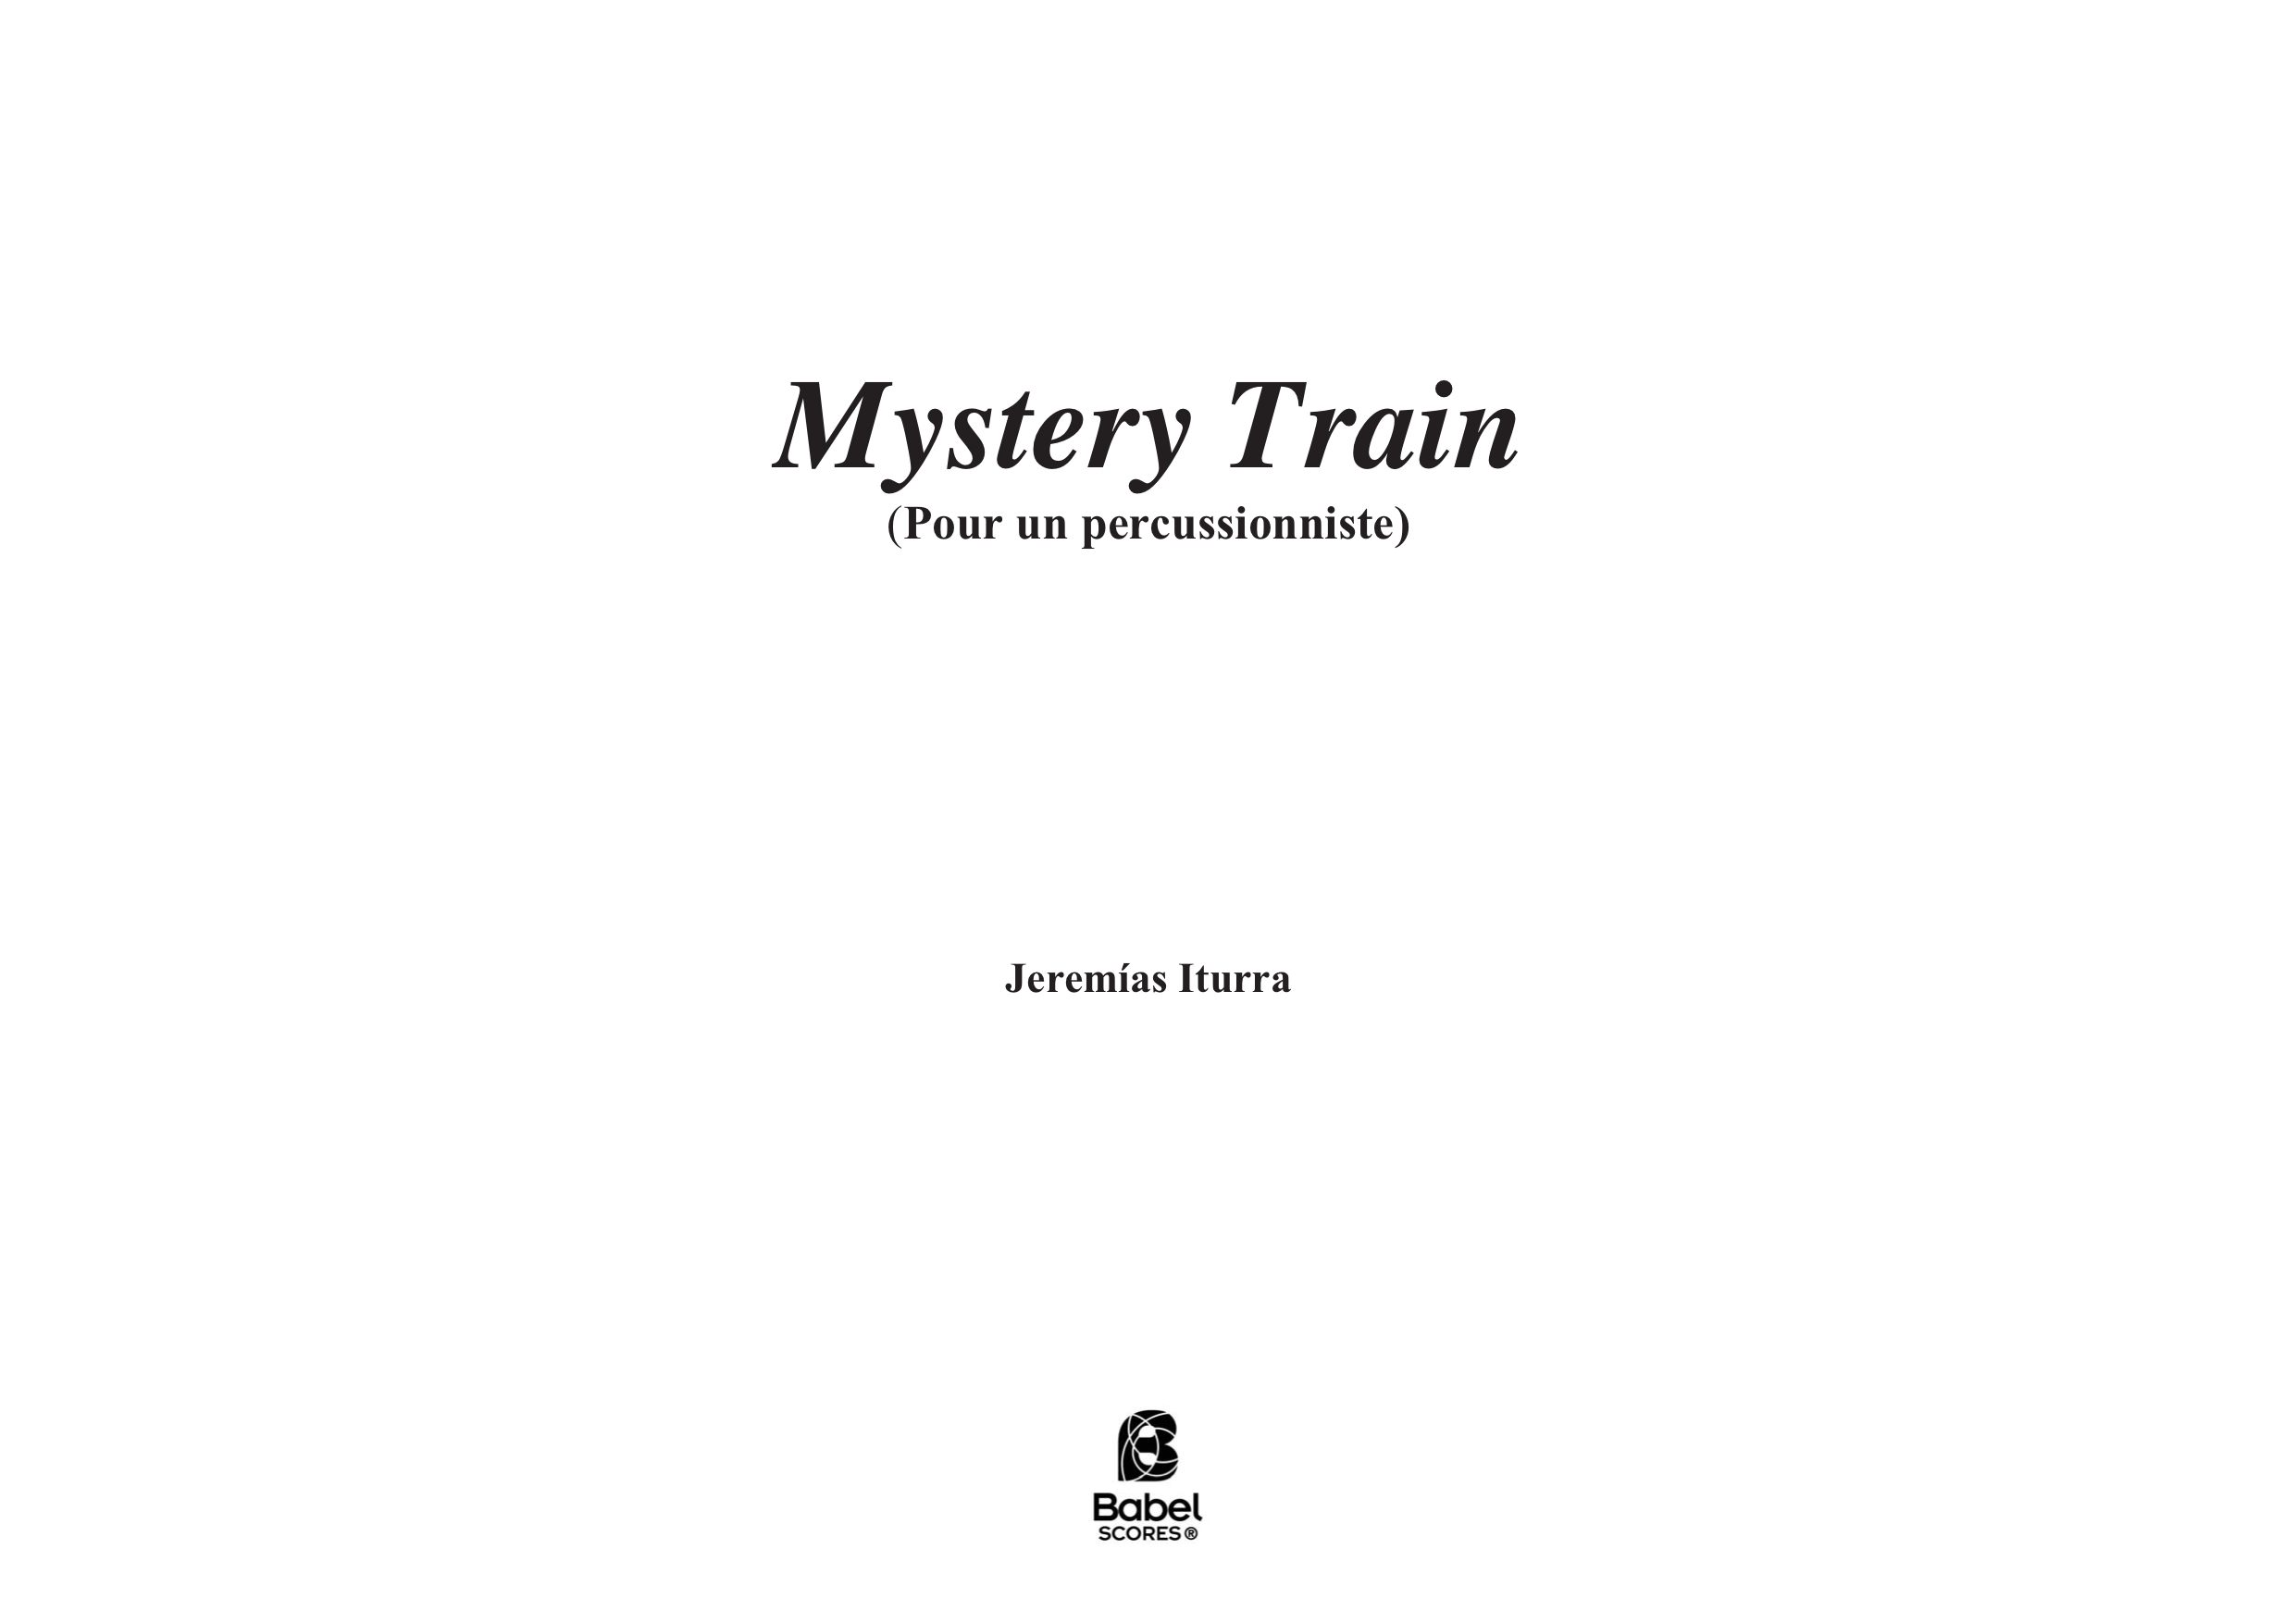 Mystery Train A3 z 3 1 923